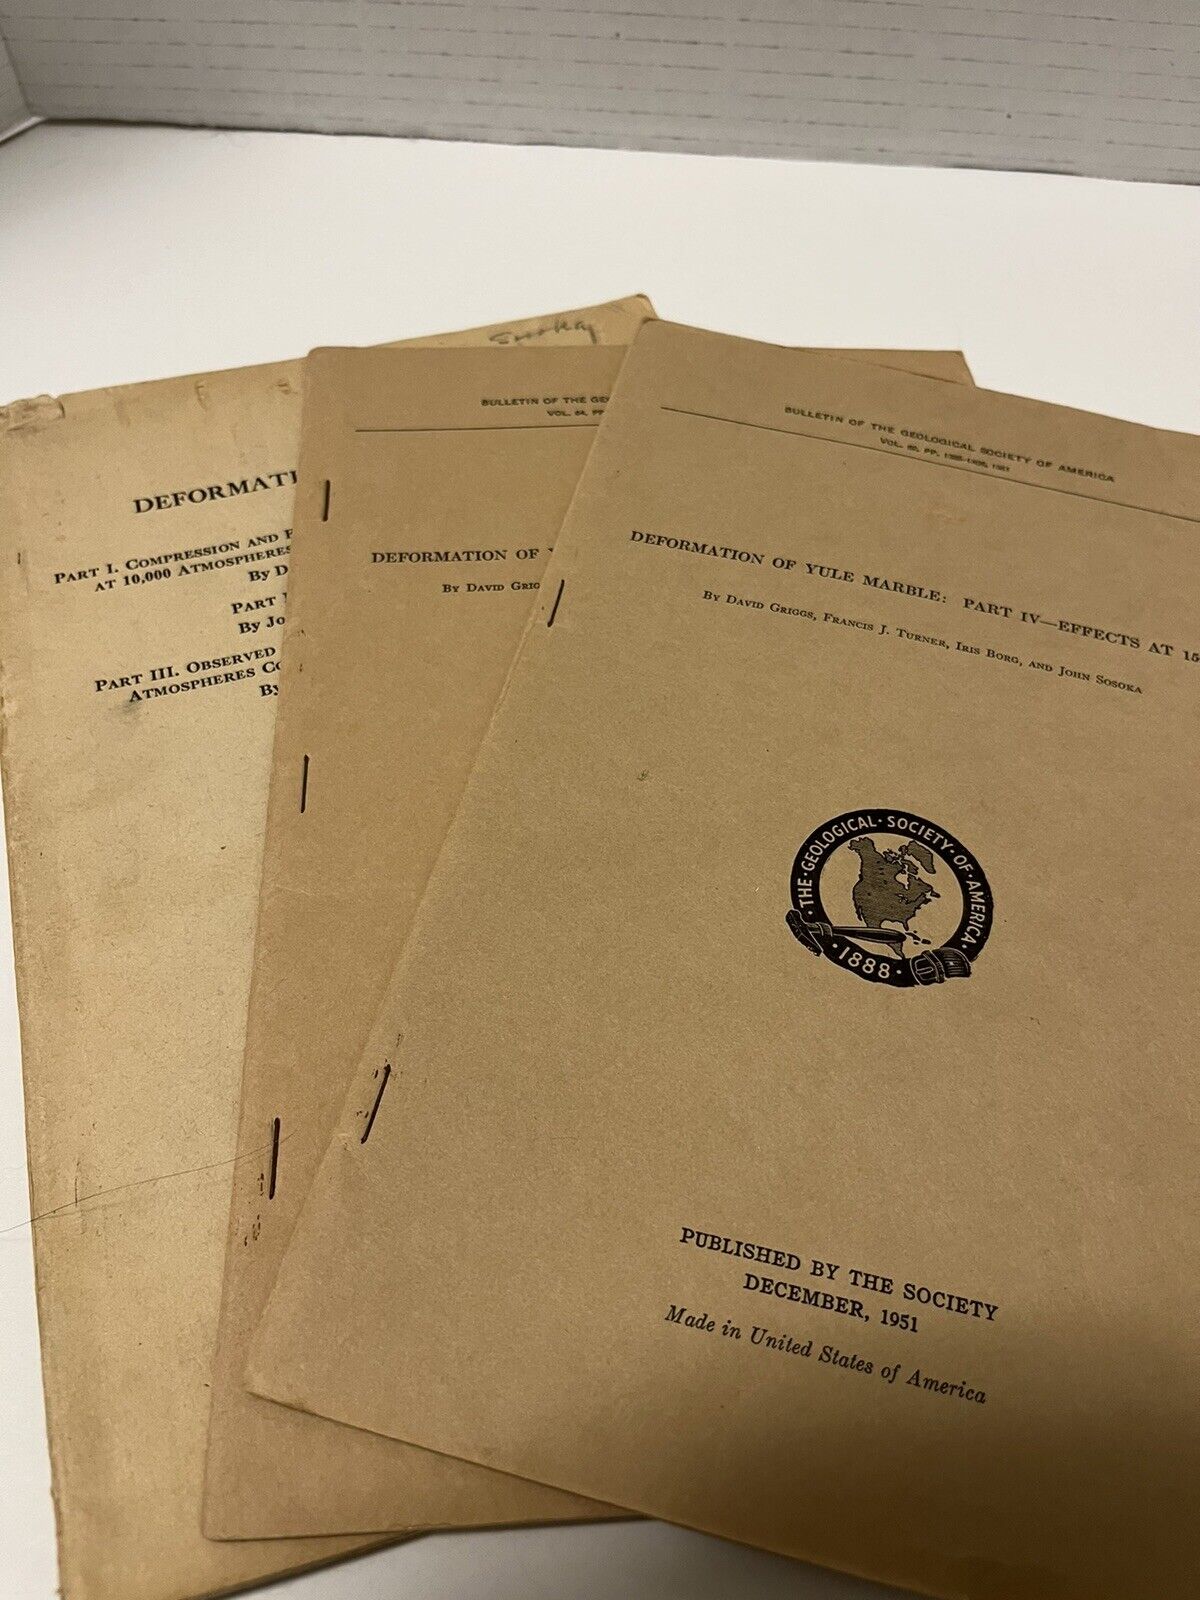 1951-53. 3 Geological Society Bulletins On Deformation of Yule Marble.